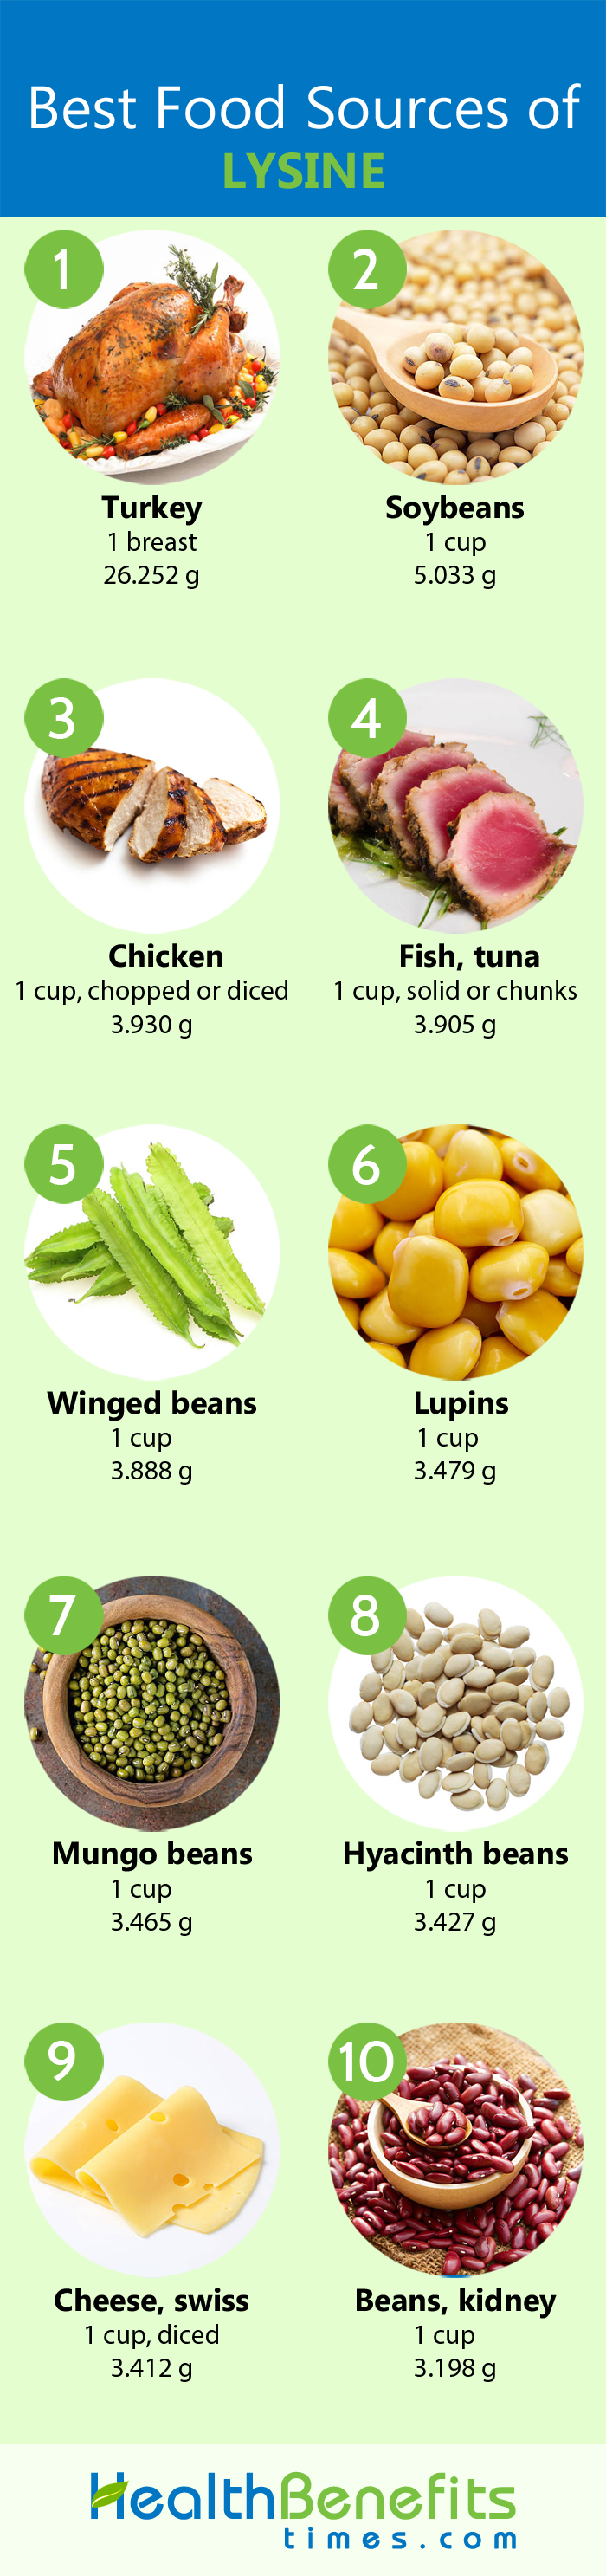 lysine foods